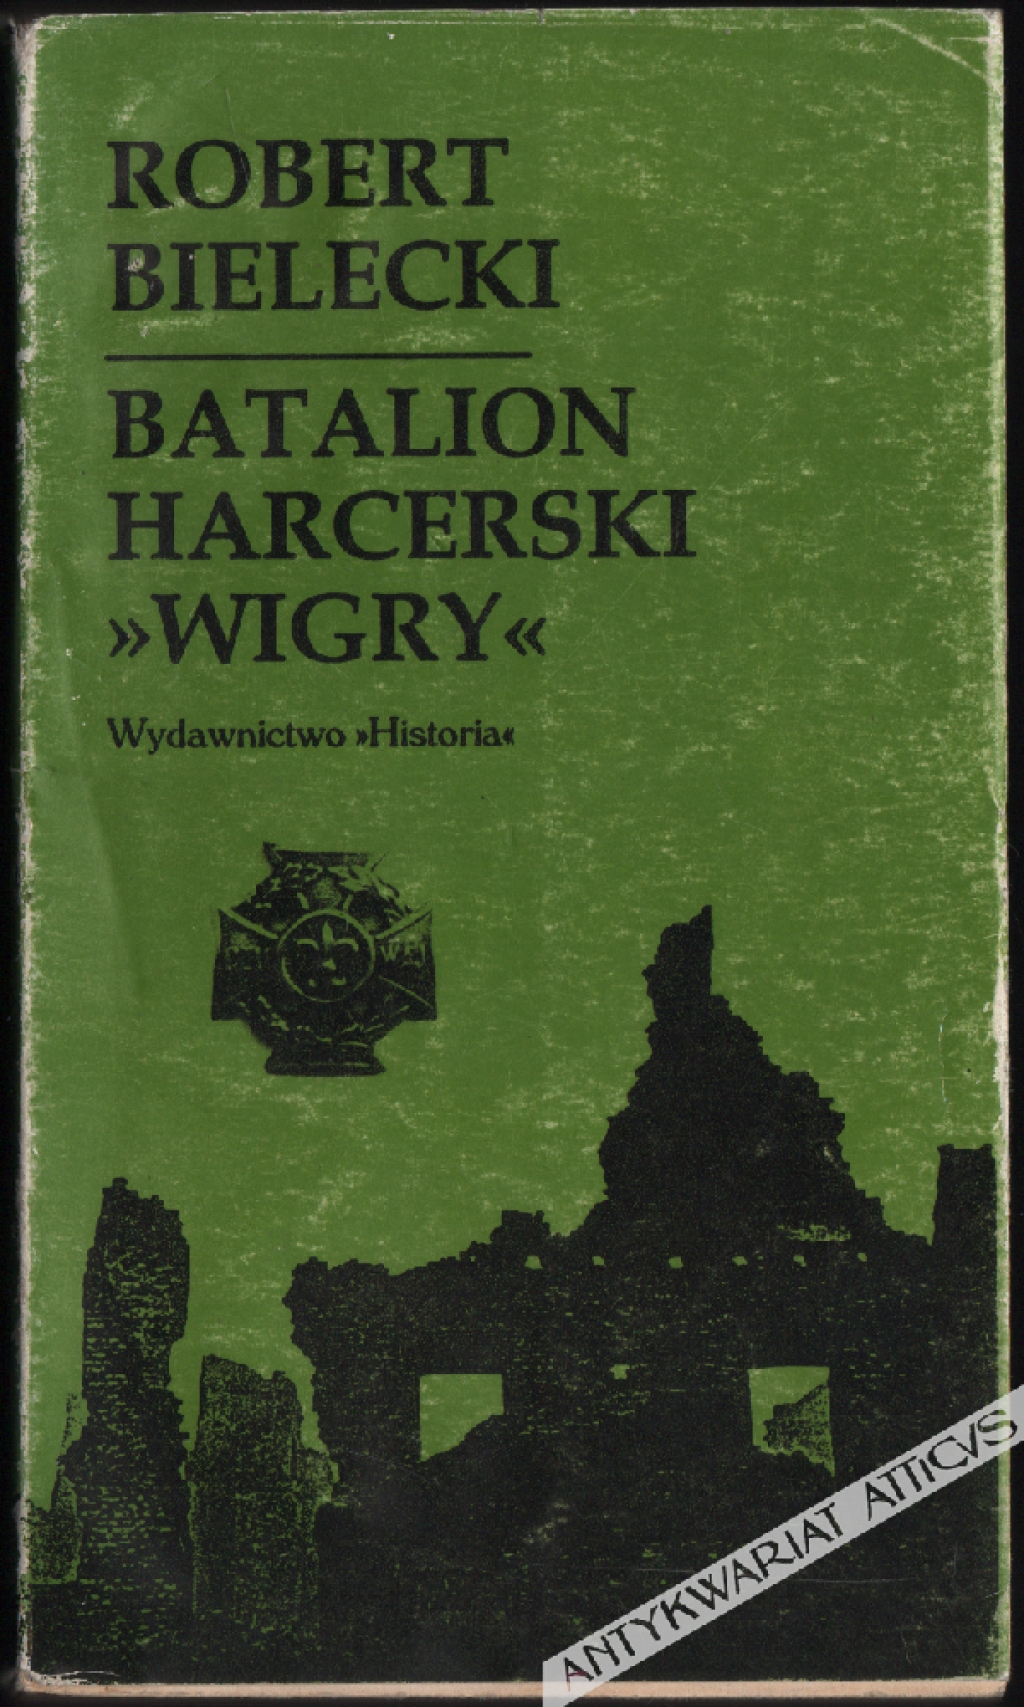 Batalion harcerski "Wigry"